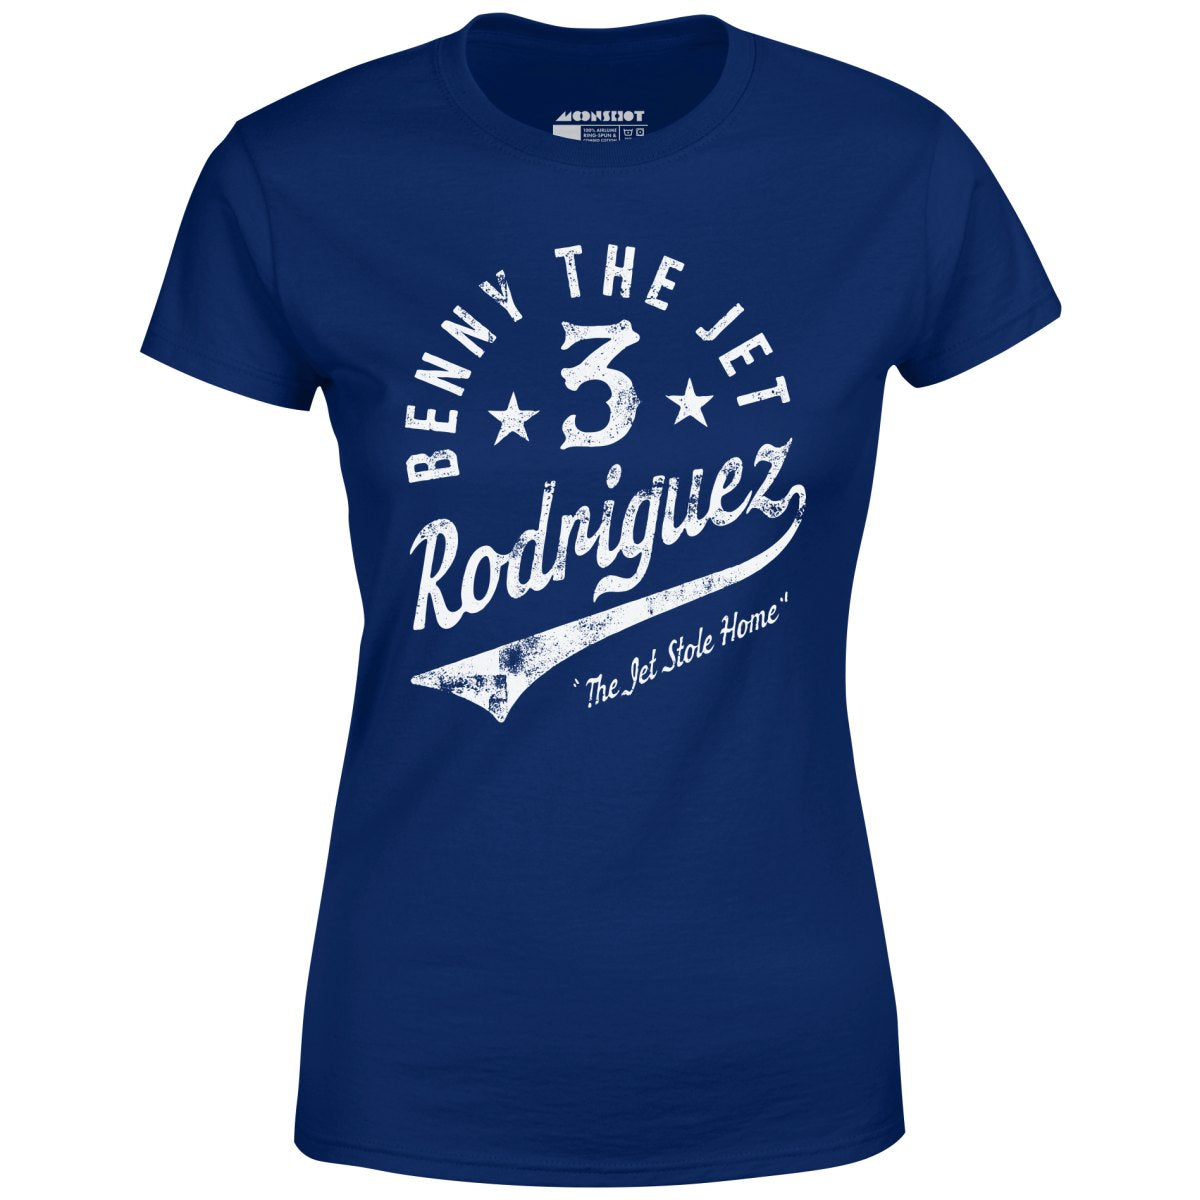 Benny the Jet Rodriguez - Women's T-Shirt